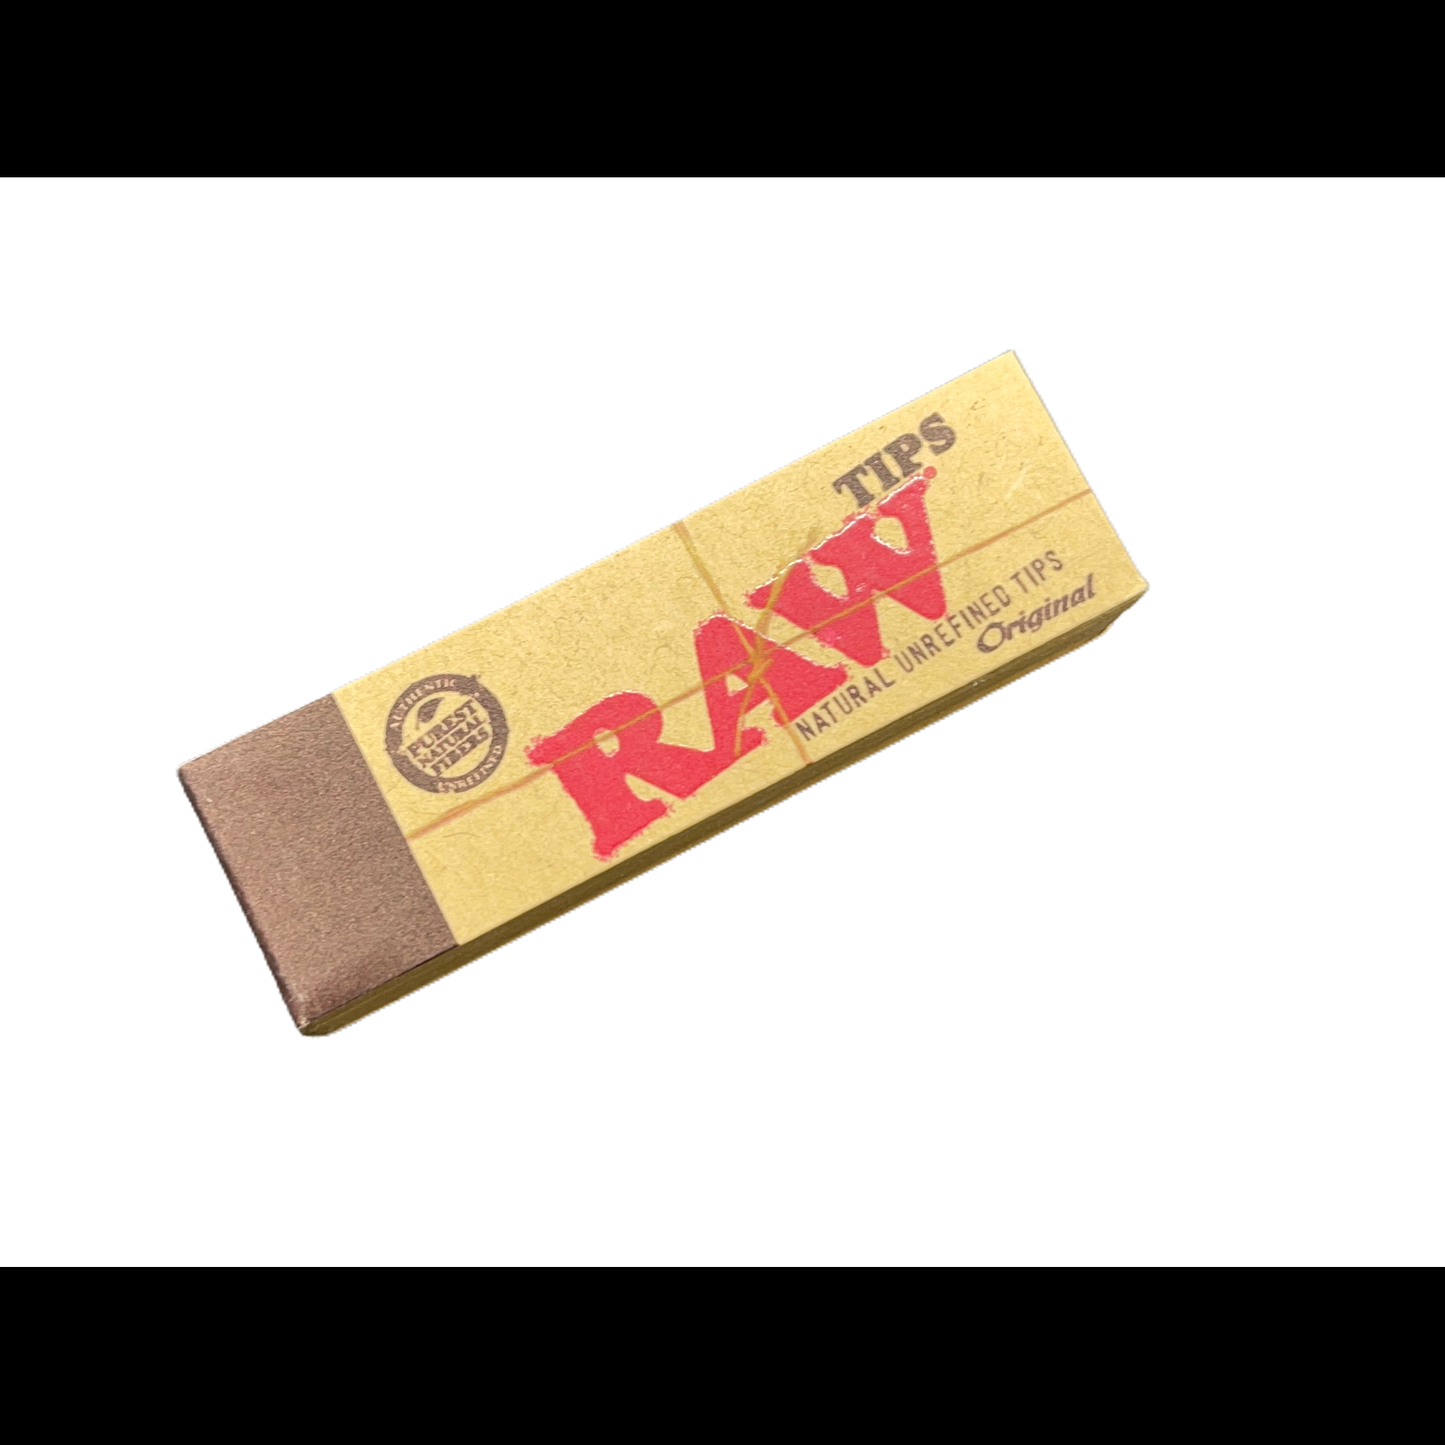 RAW - Original Tips